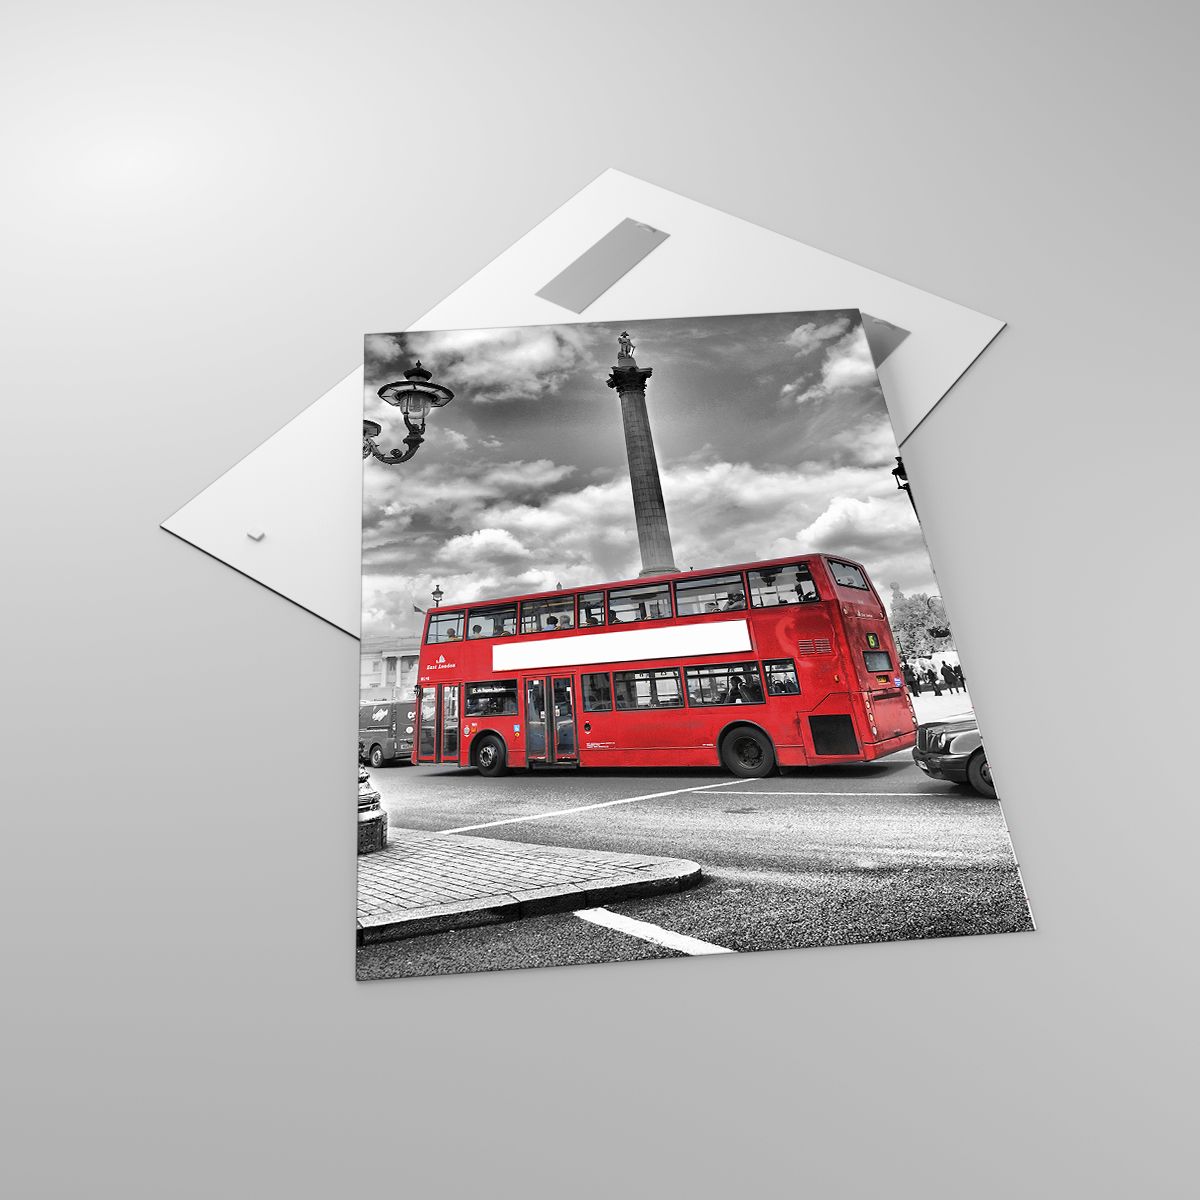 Cuadro Ciudades, Cuadro Londres, Cuadro Arquitectura, Cuadro Autobús Rojo, Cuadro Viajes